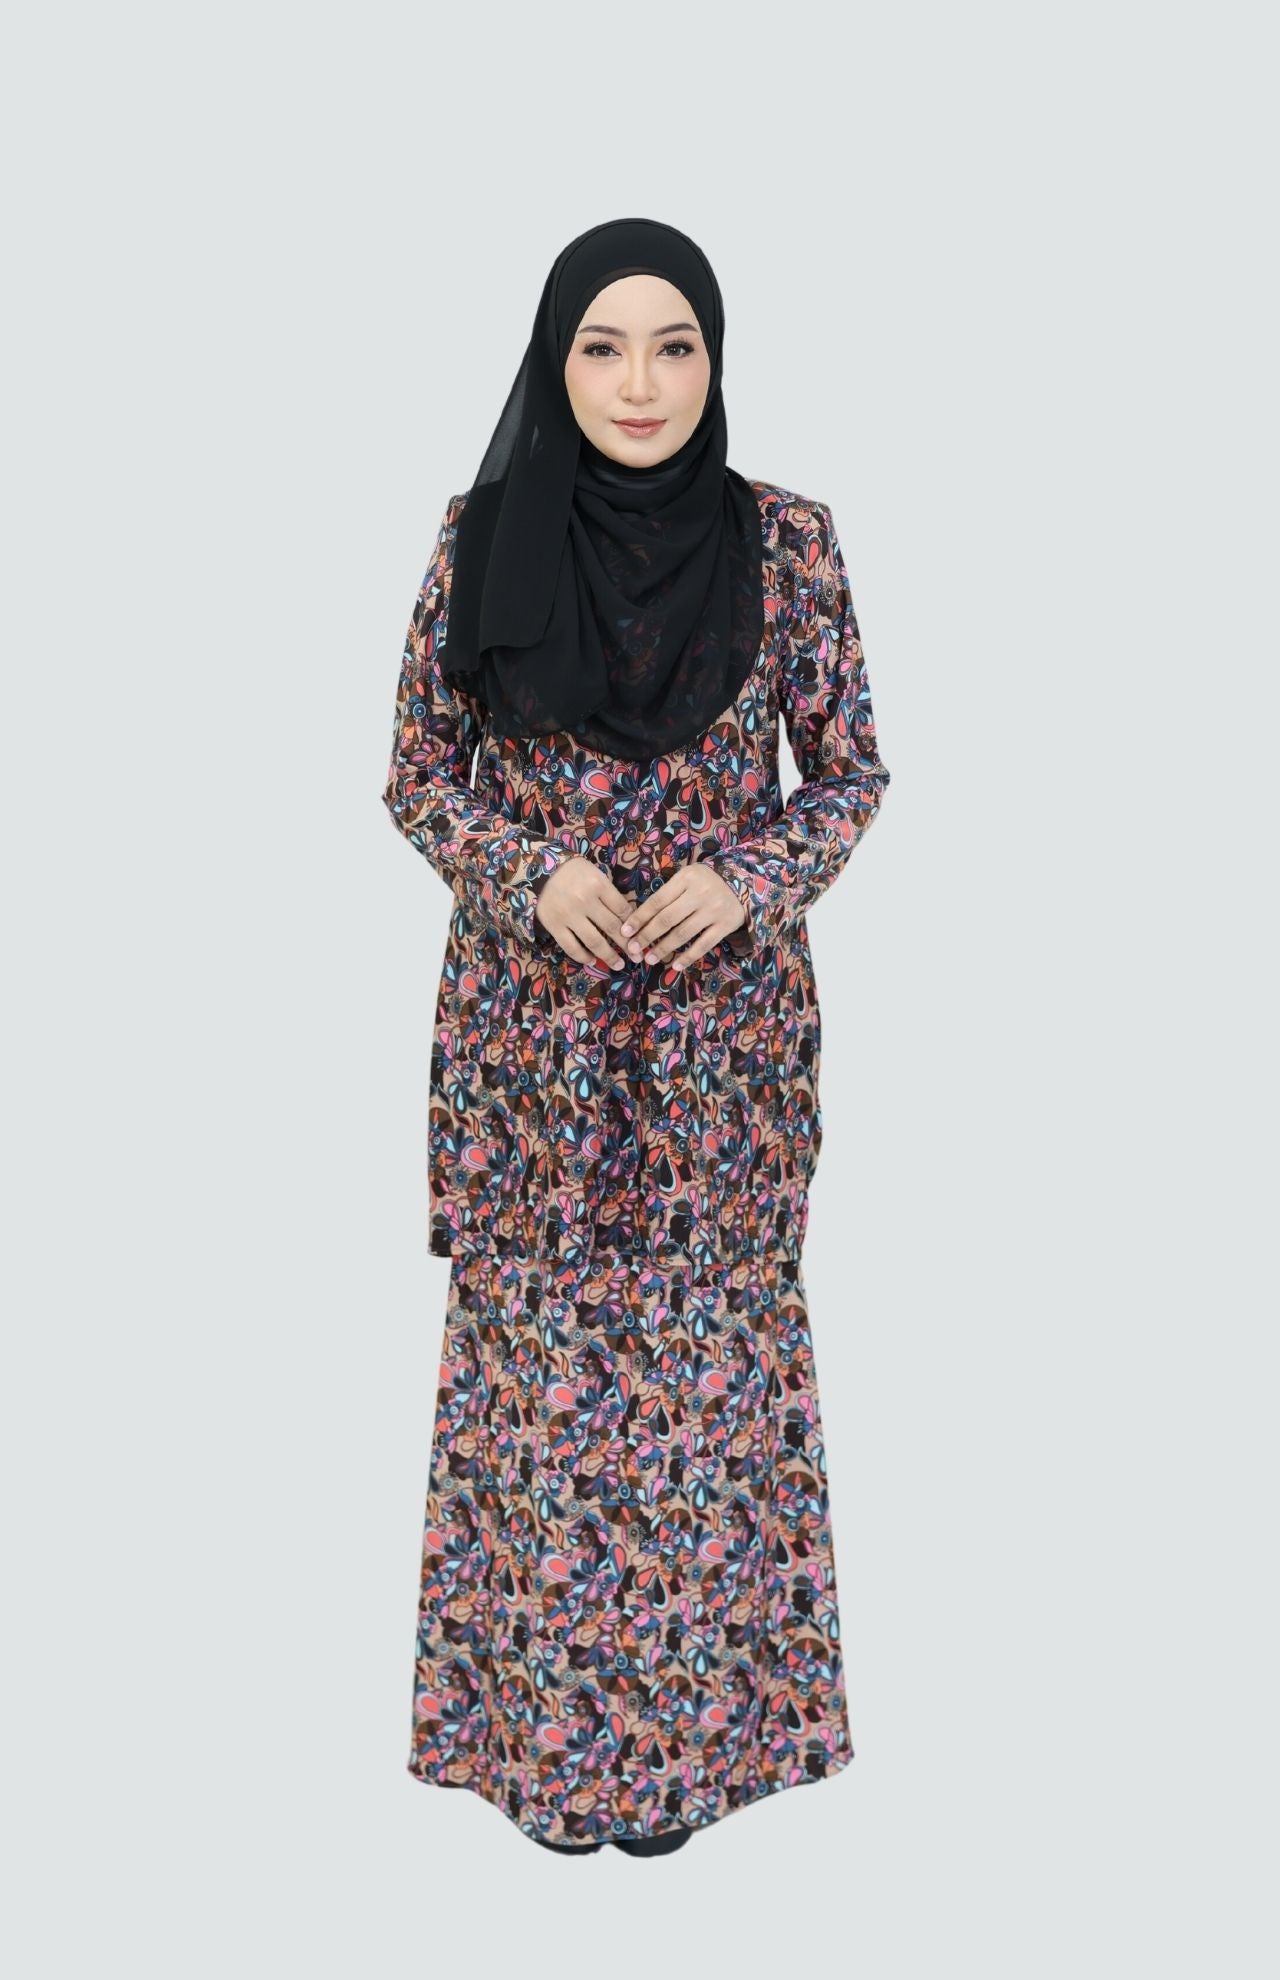 Floral Elegance: Baju Kurung in Lycra Fabric